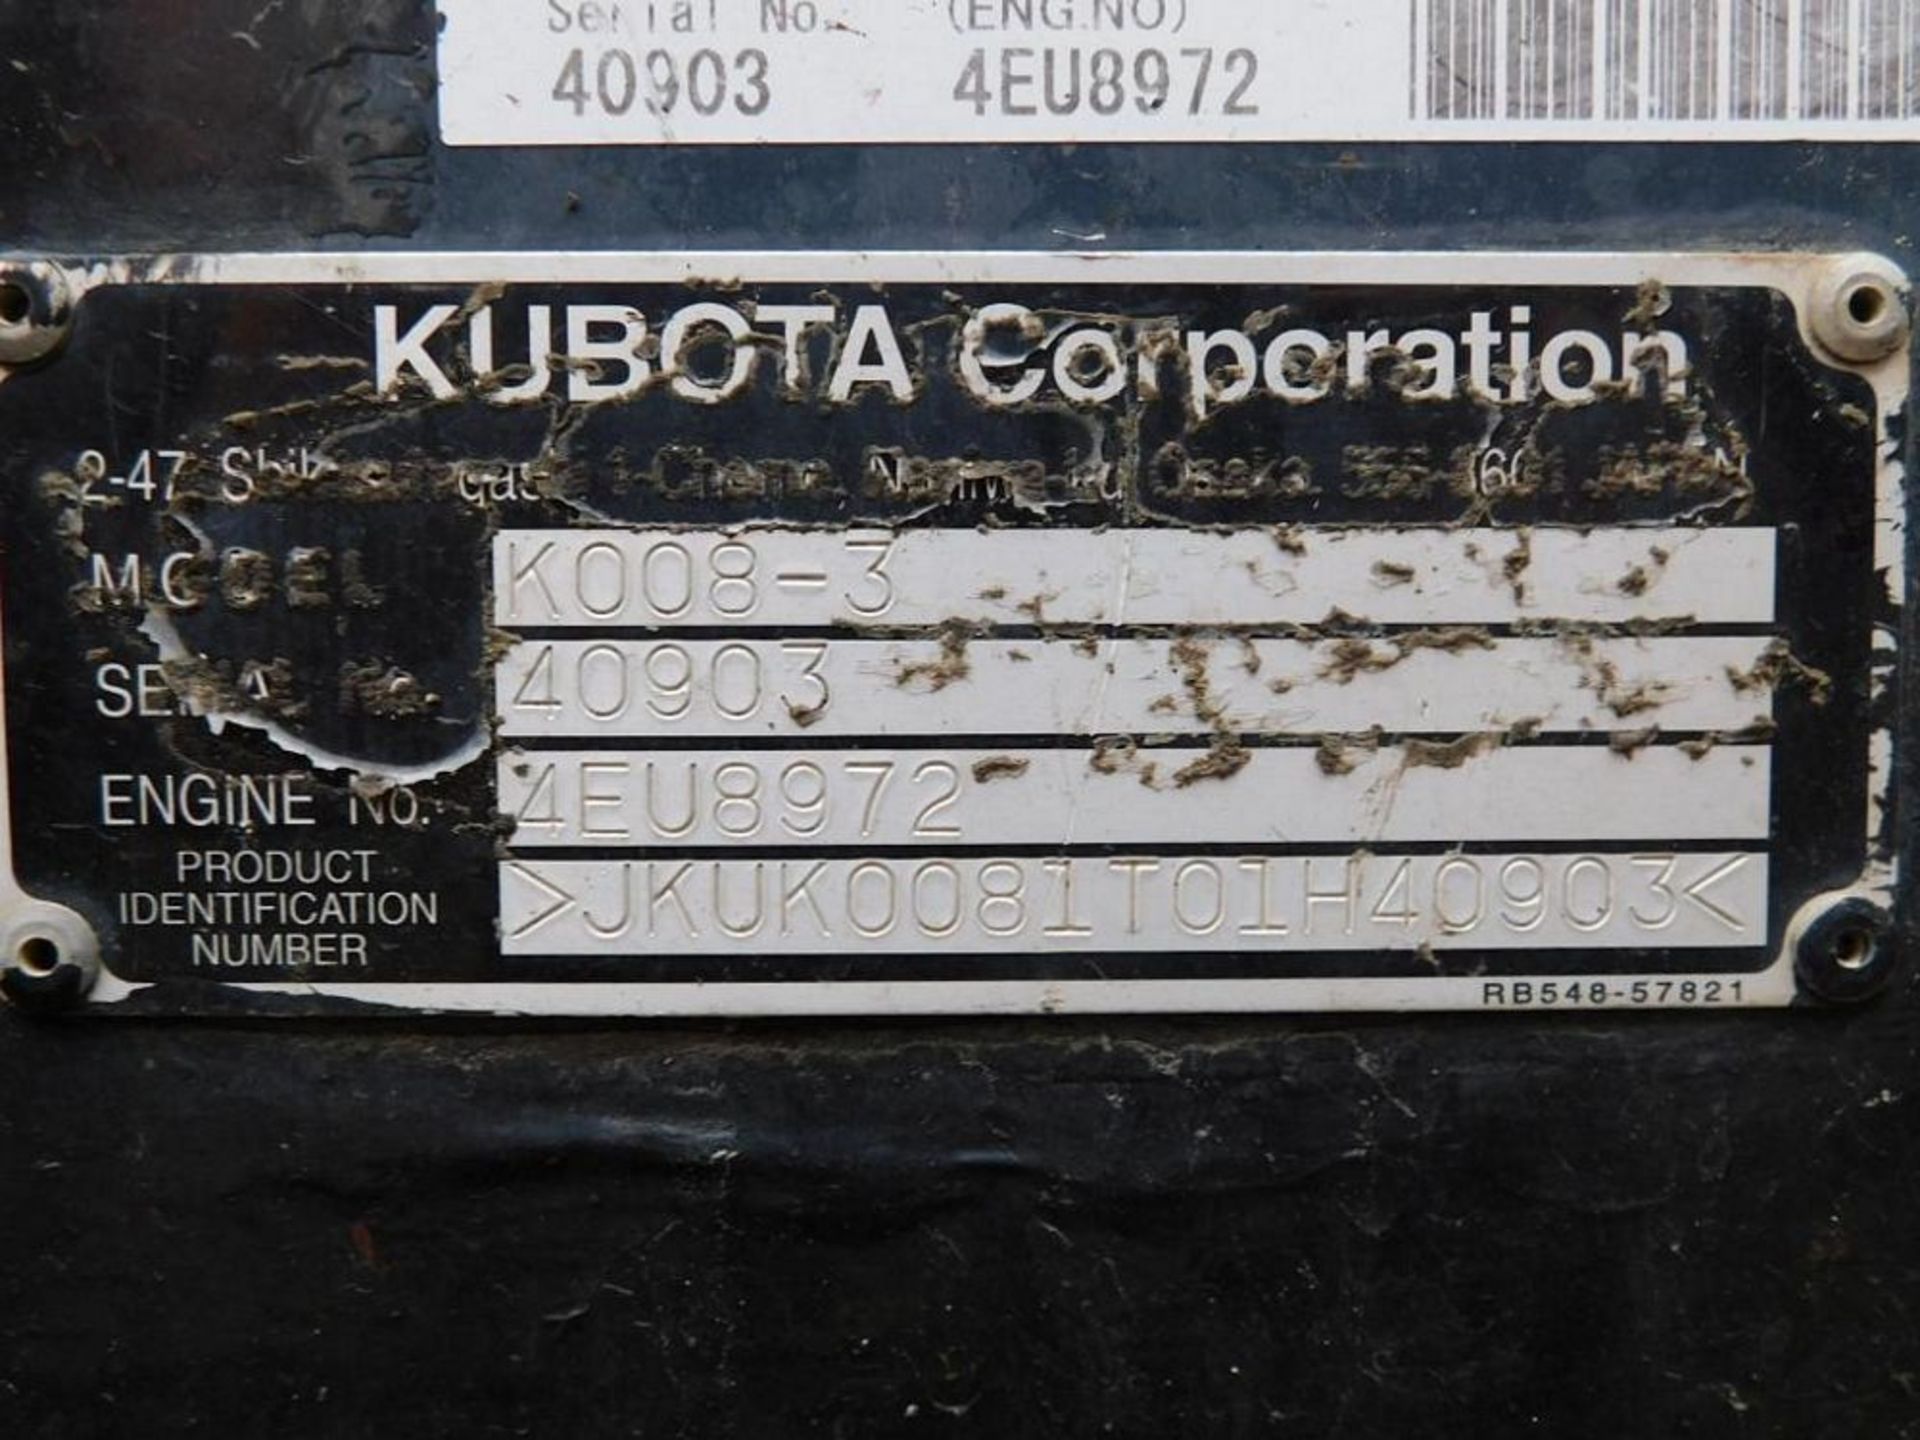 Kubota K008-3 Compact Excavator, VIN JKUK0081T01H40903, S/N 40903, 704 Hours Indicated (LOCATION: - Image 8 of 8